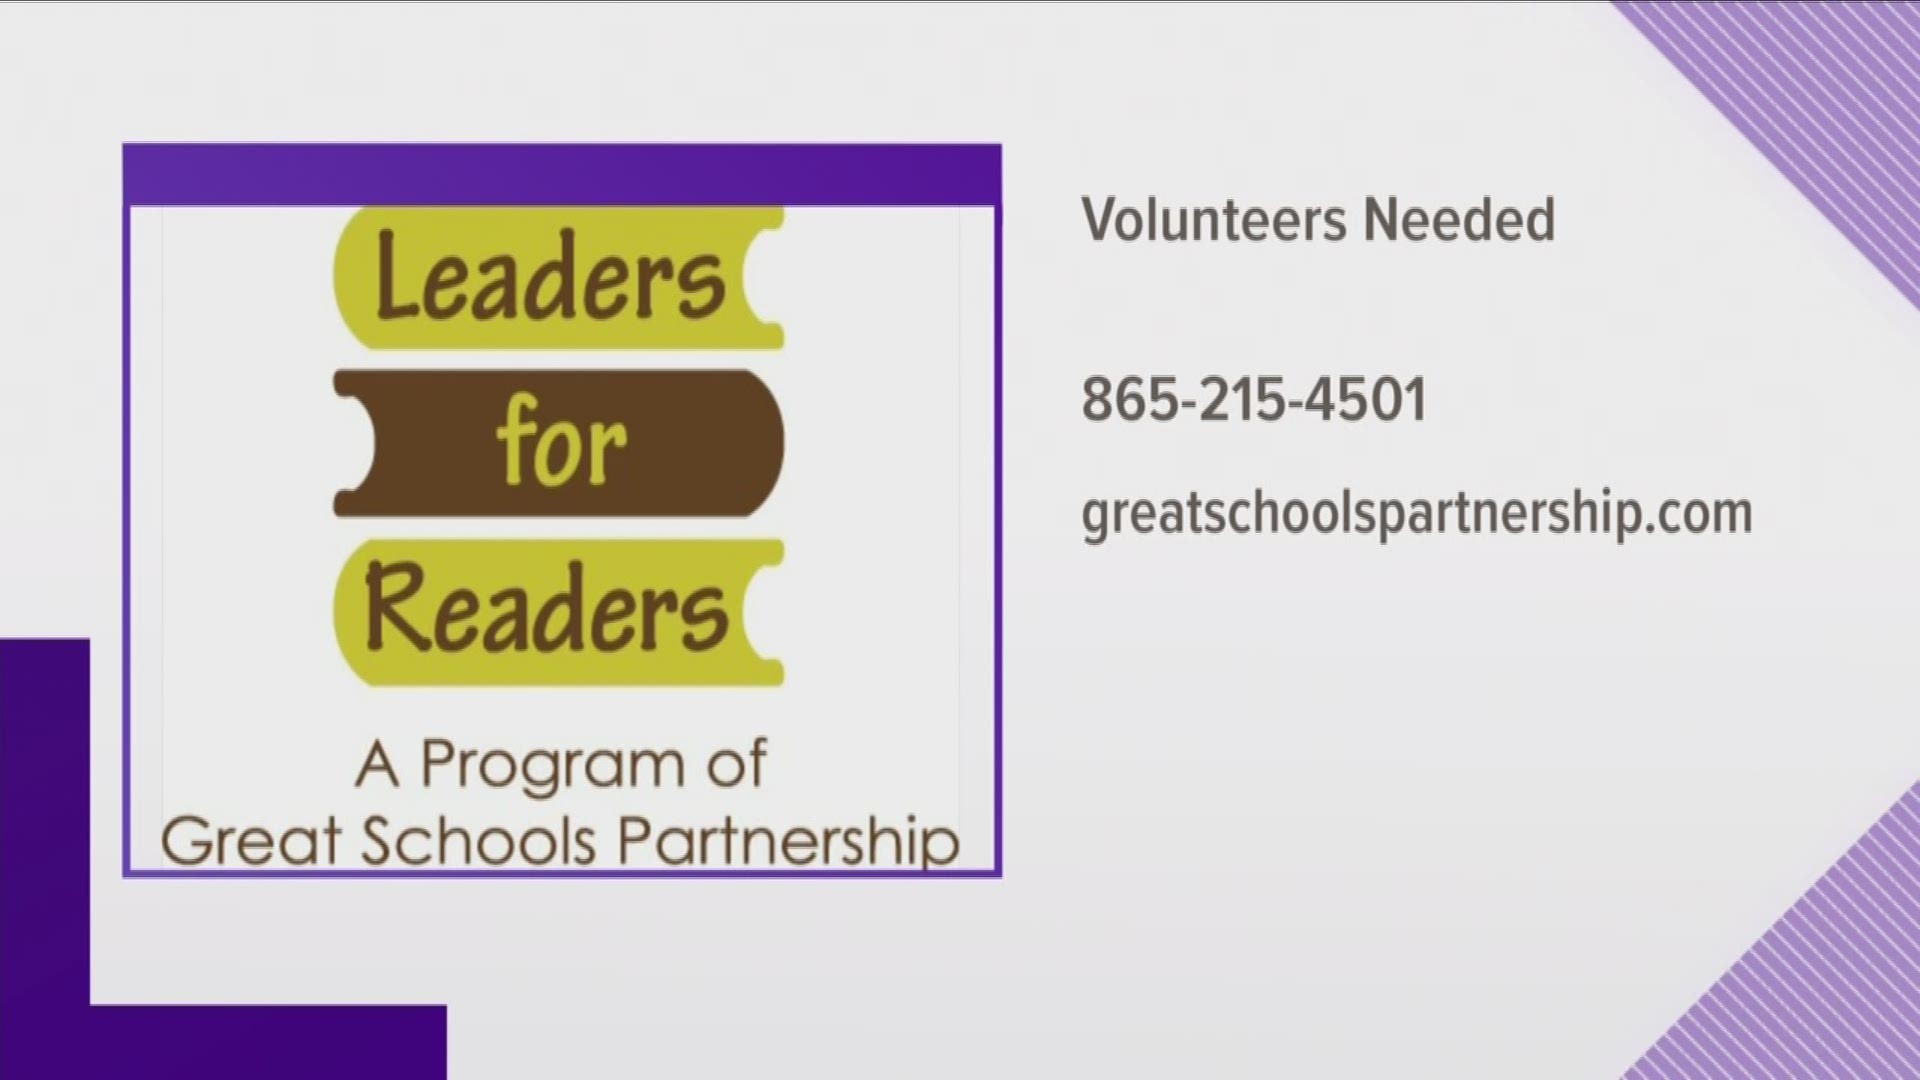 Volunteers with the Great Schools Partnership program spend time reading with children greatschoolspartnership.com